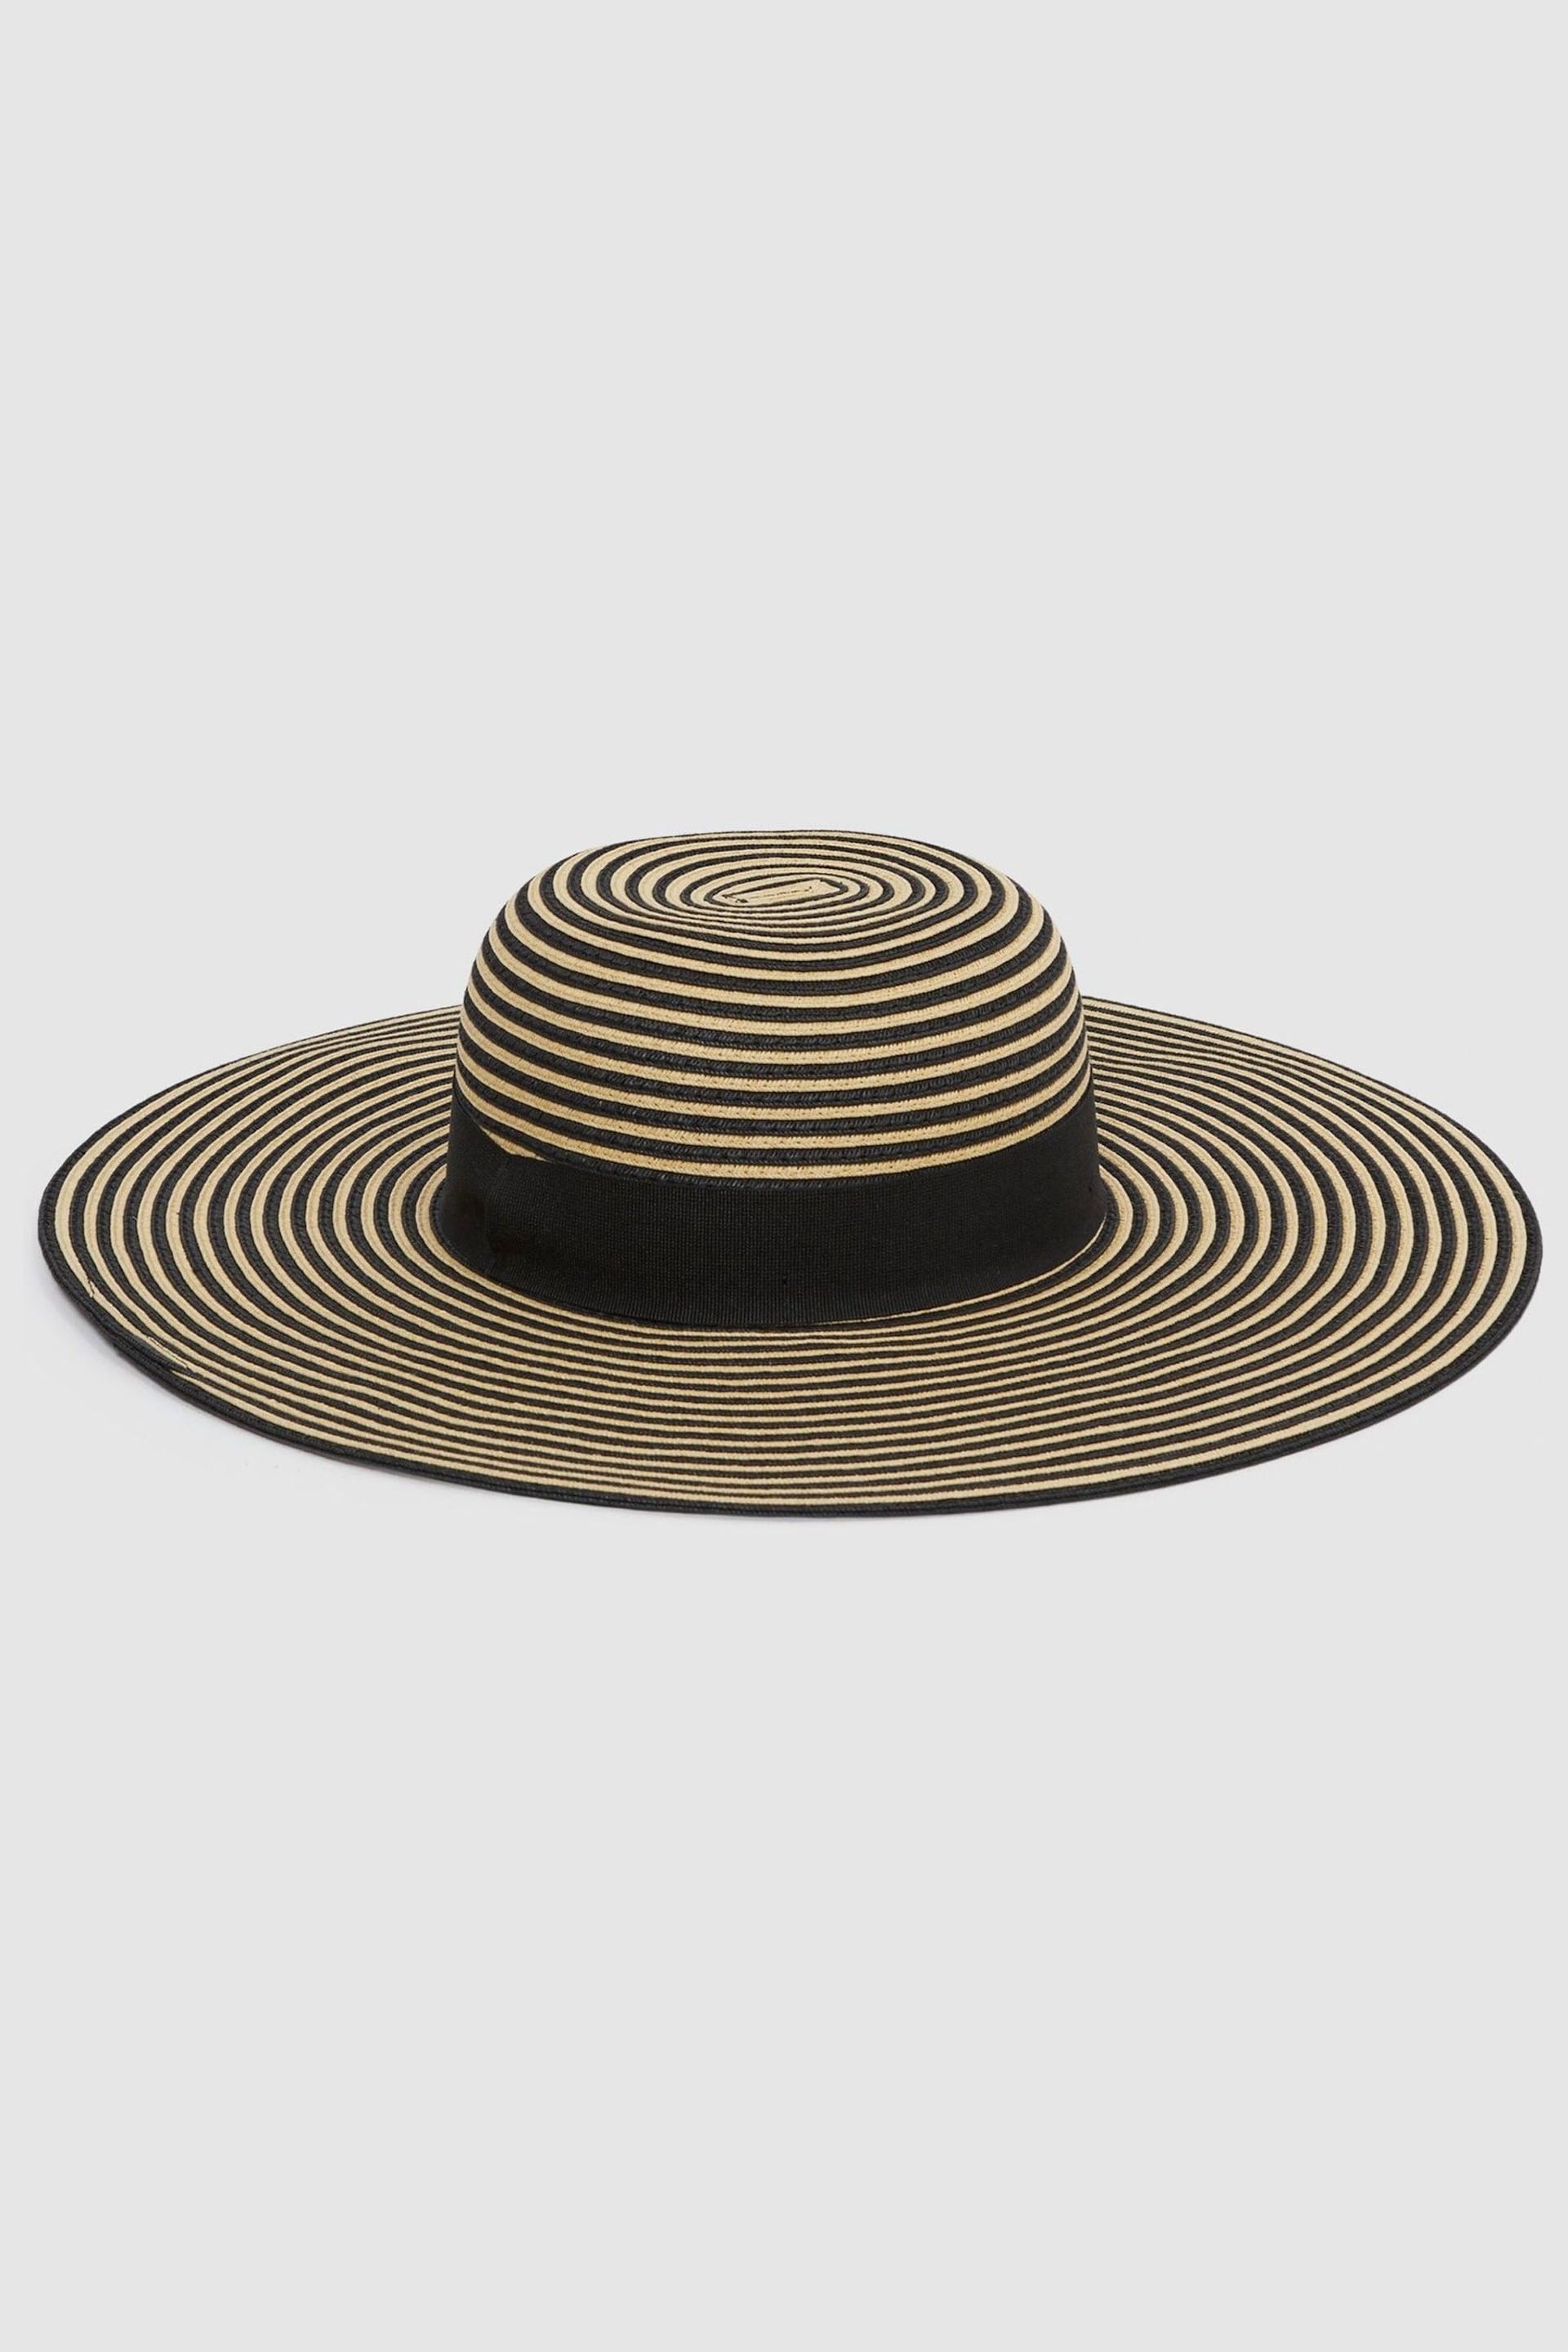 Reiss Black/Neutral Emilia Paper Straw Wide Brim Hat - Image 4 of 4